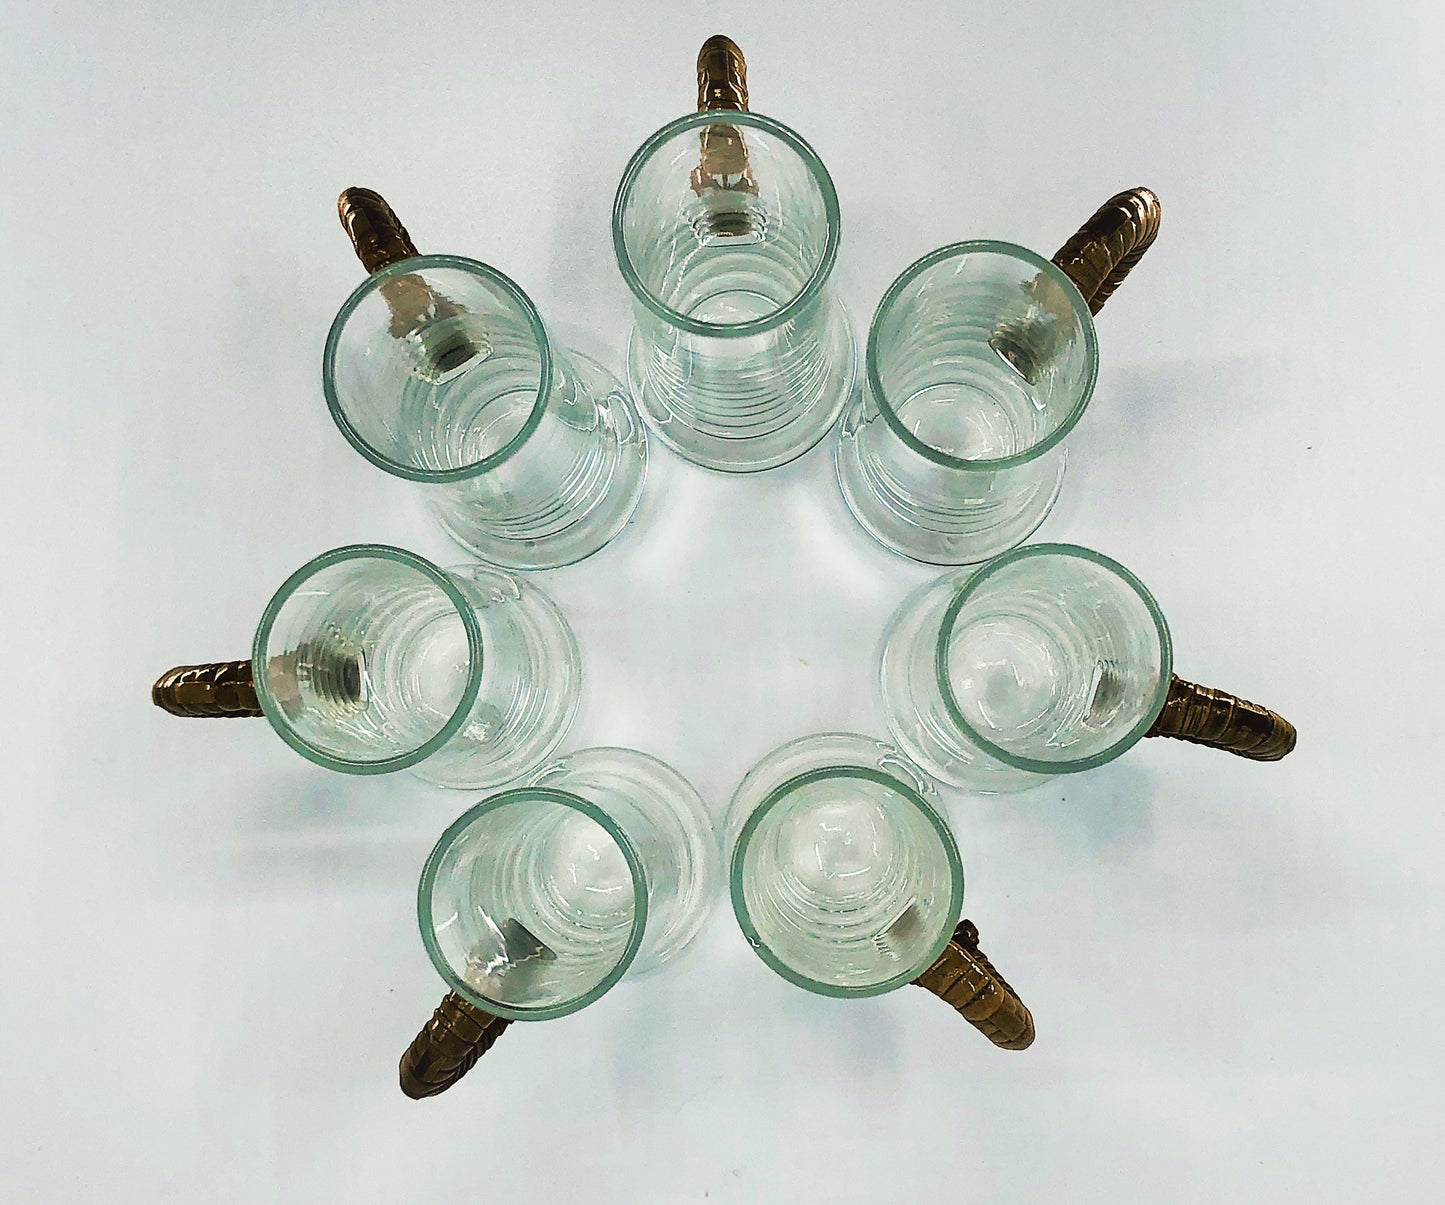 Retro Scandinavian Style Shot Glasses with Wicker Handles, Set of 10*